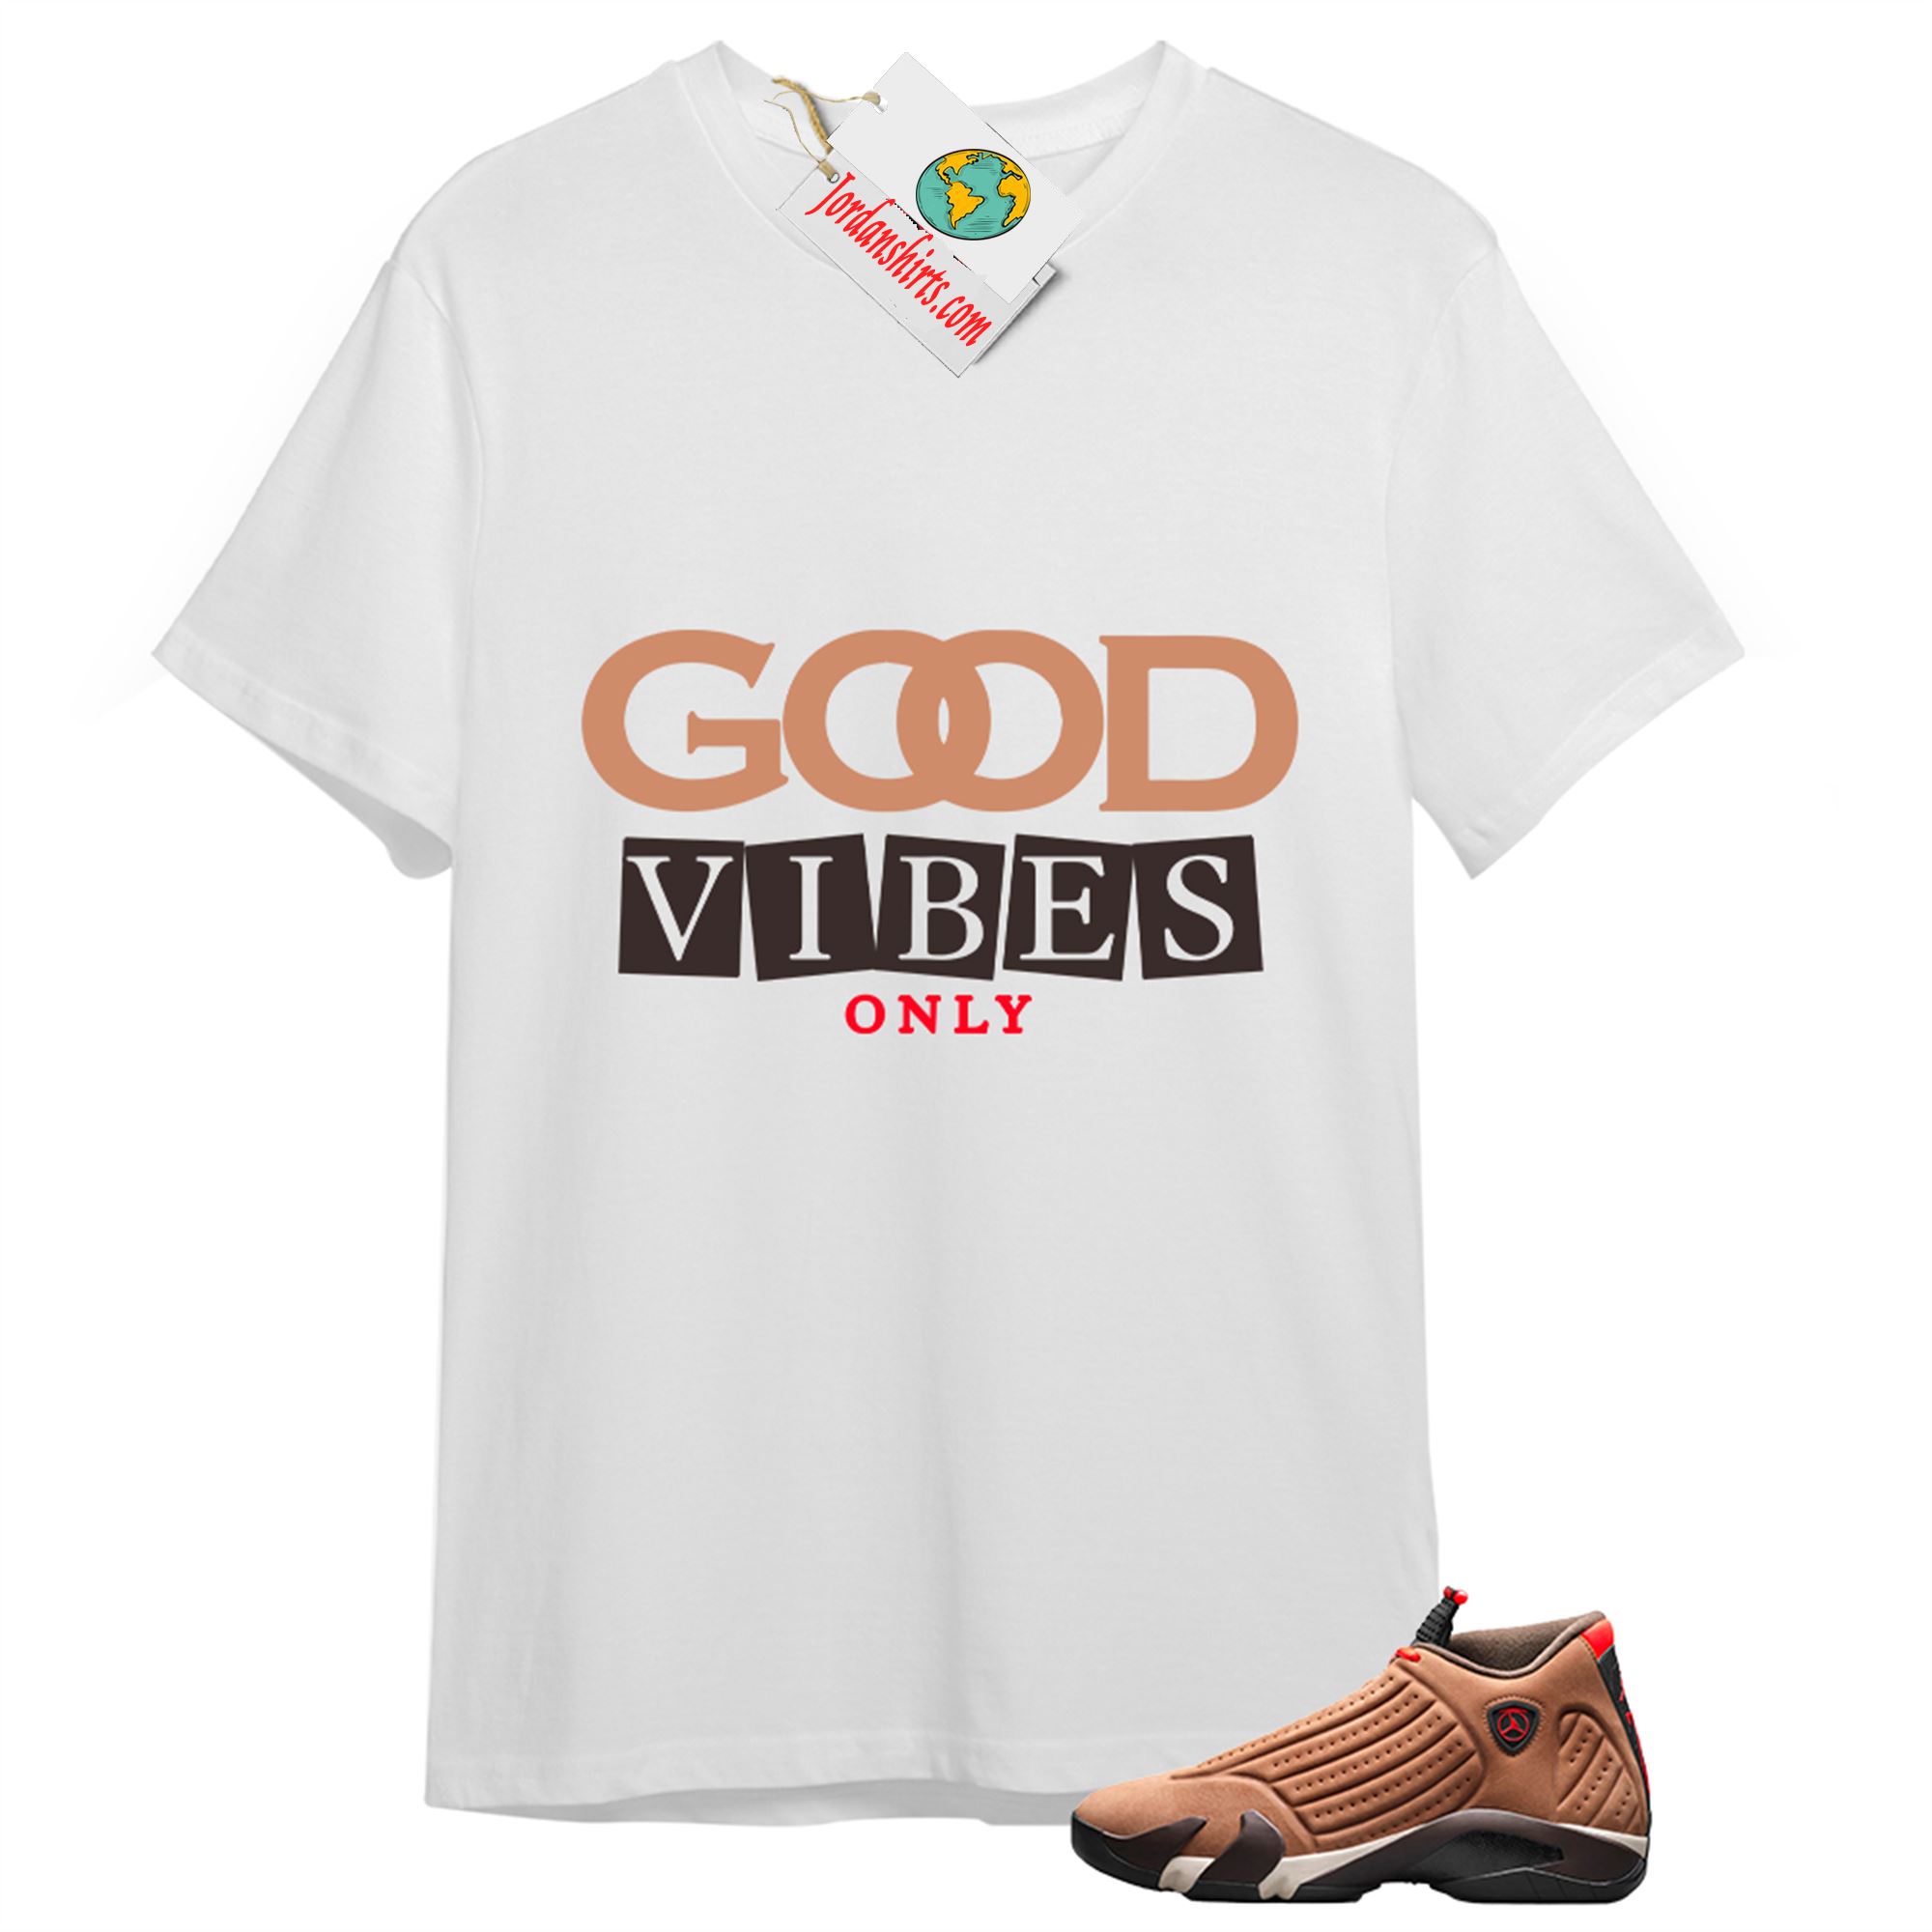 Jordan 14 Shirt, Good Vibes Only White T-shirt Air Jordan 14 Winterized 14s Full Size Up To 5xl